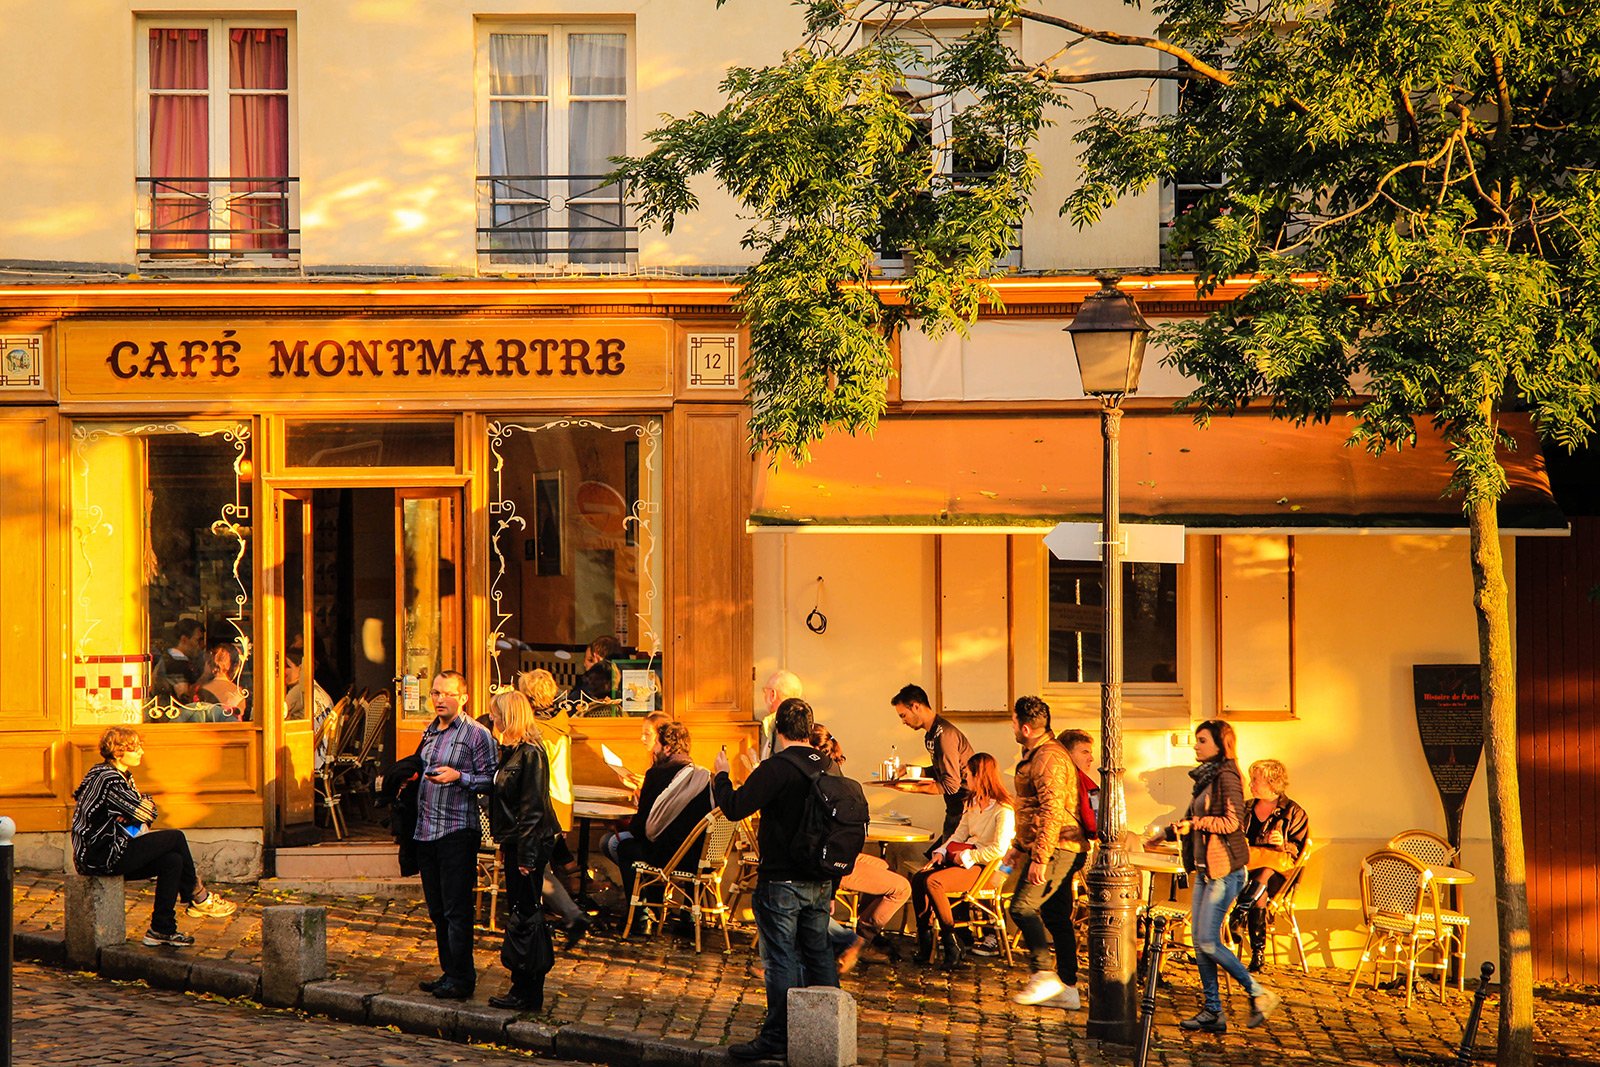 How to walk through Montmartre in Paris